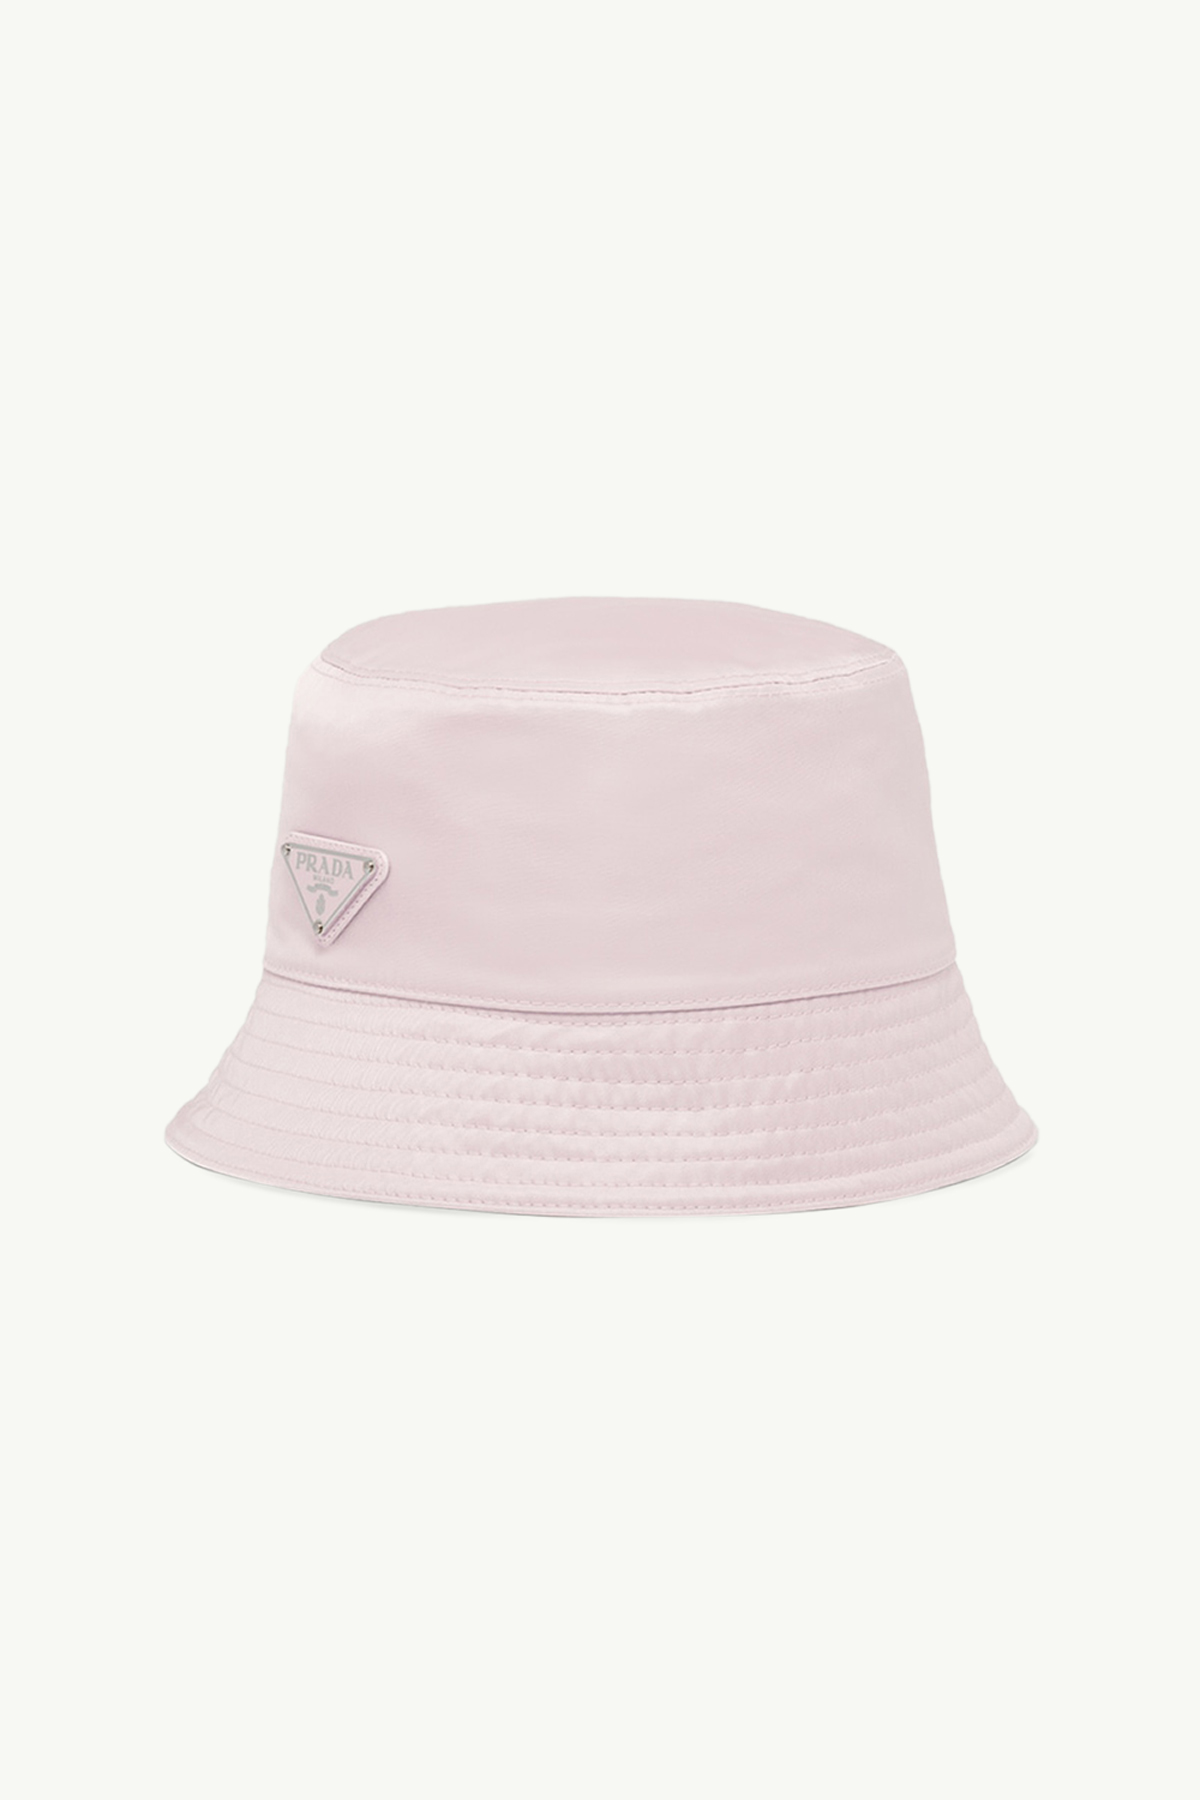 Prada Triangle Logo Bucket Hat in Alabaster Pink Re-Nylon 2